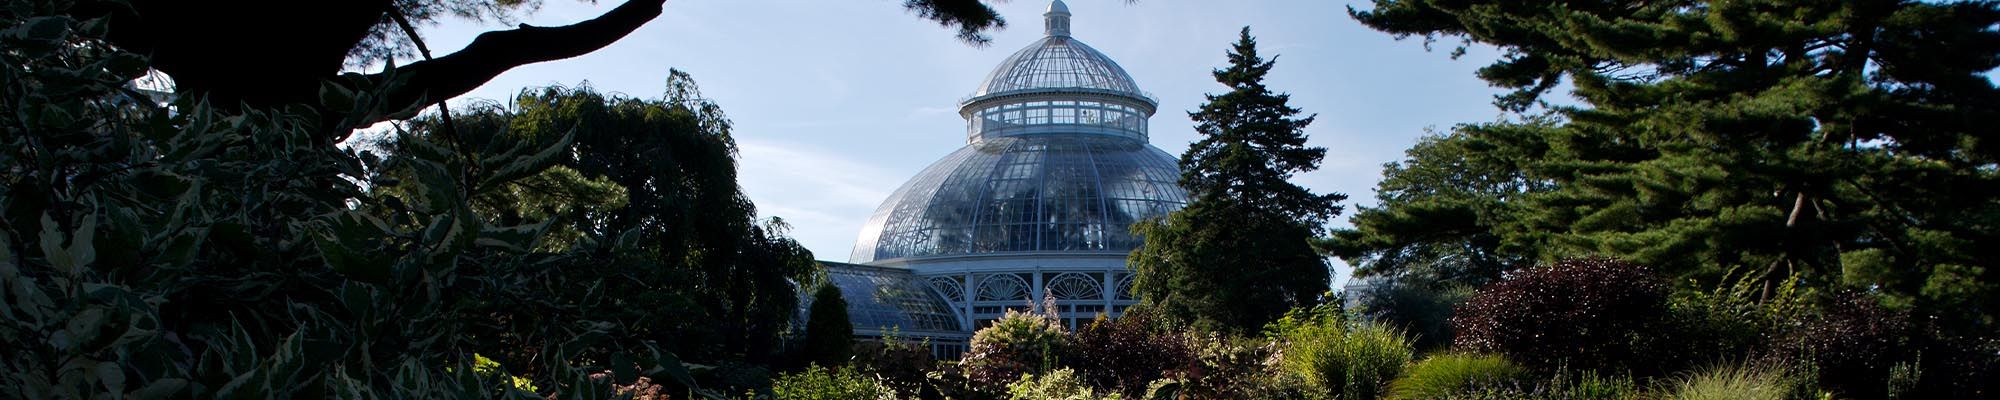 Image of the Botanical Gardens